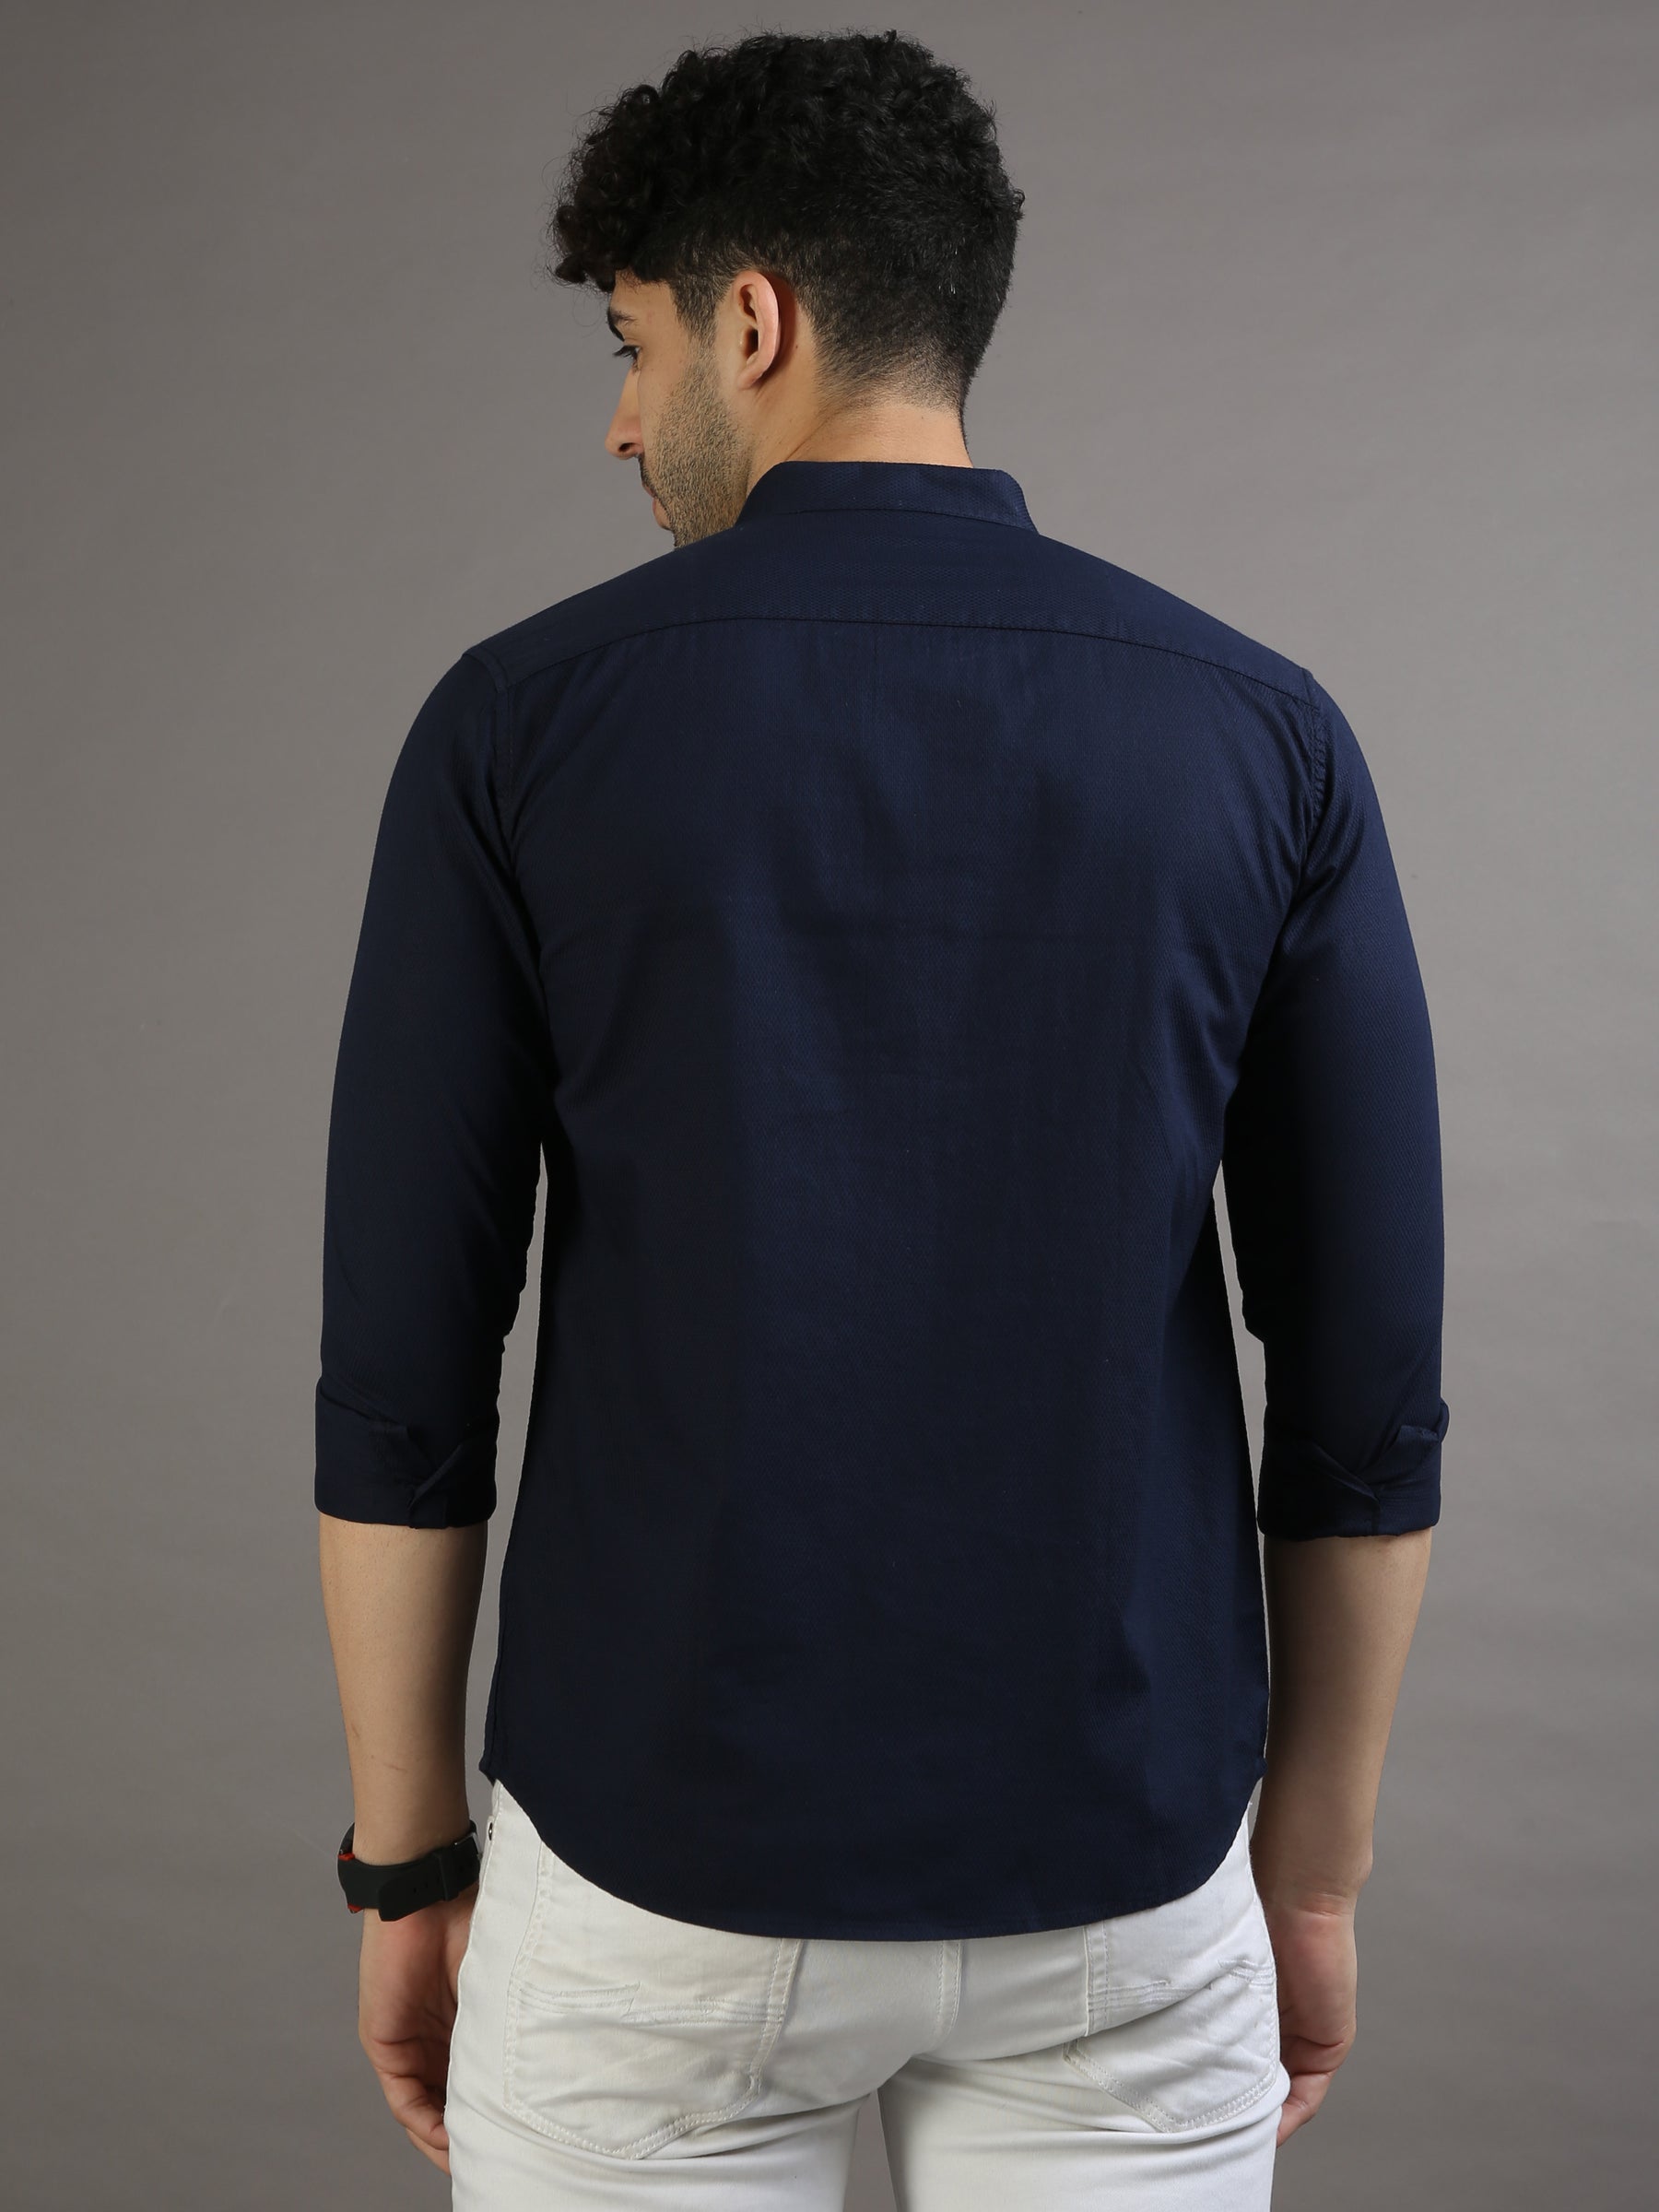 Dobby Navy Blue Chinese Collar Casual Shirt Solid Shirt Bushirt   